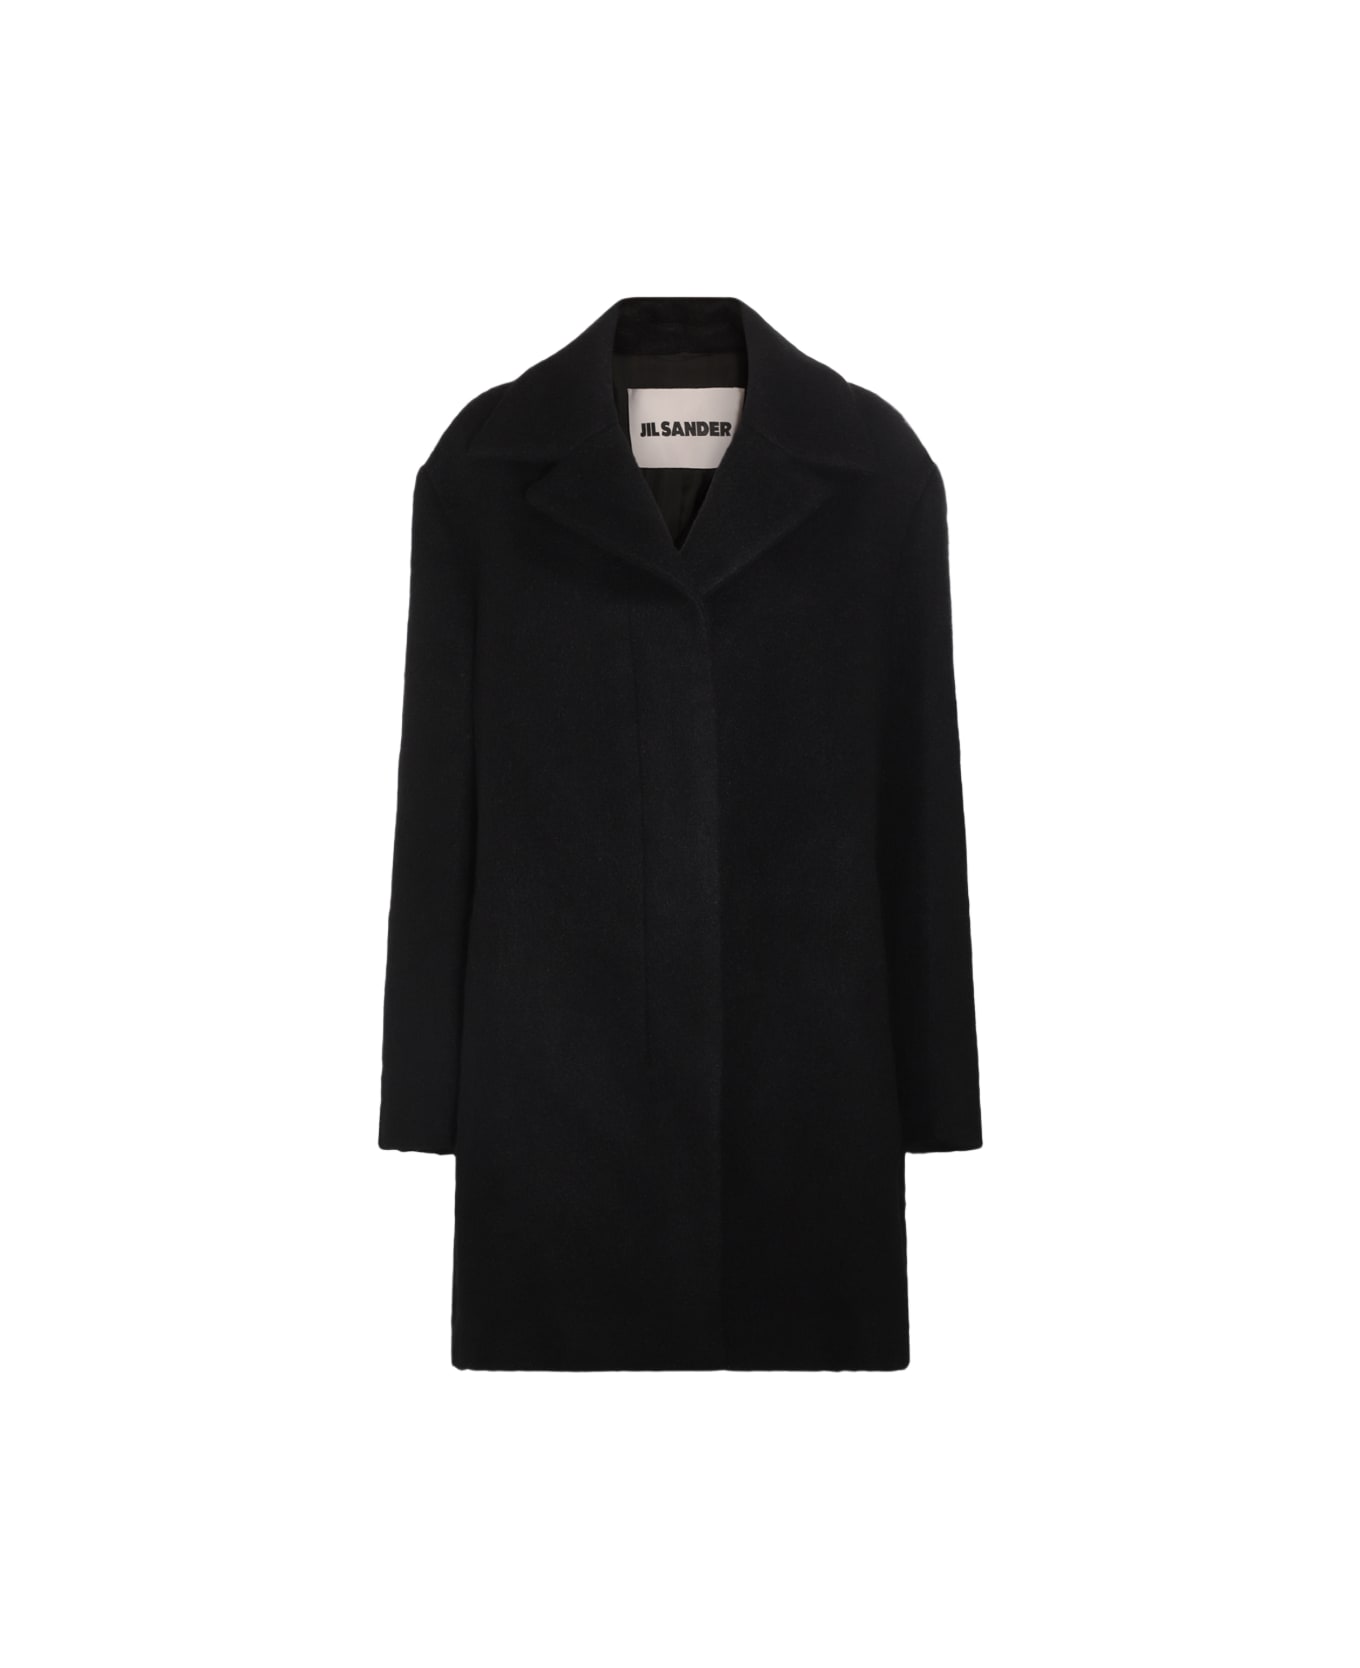 Jil Sander Black Wool And Mohair Blend Coat - Black